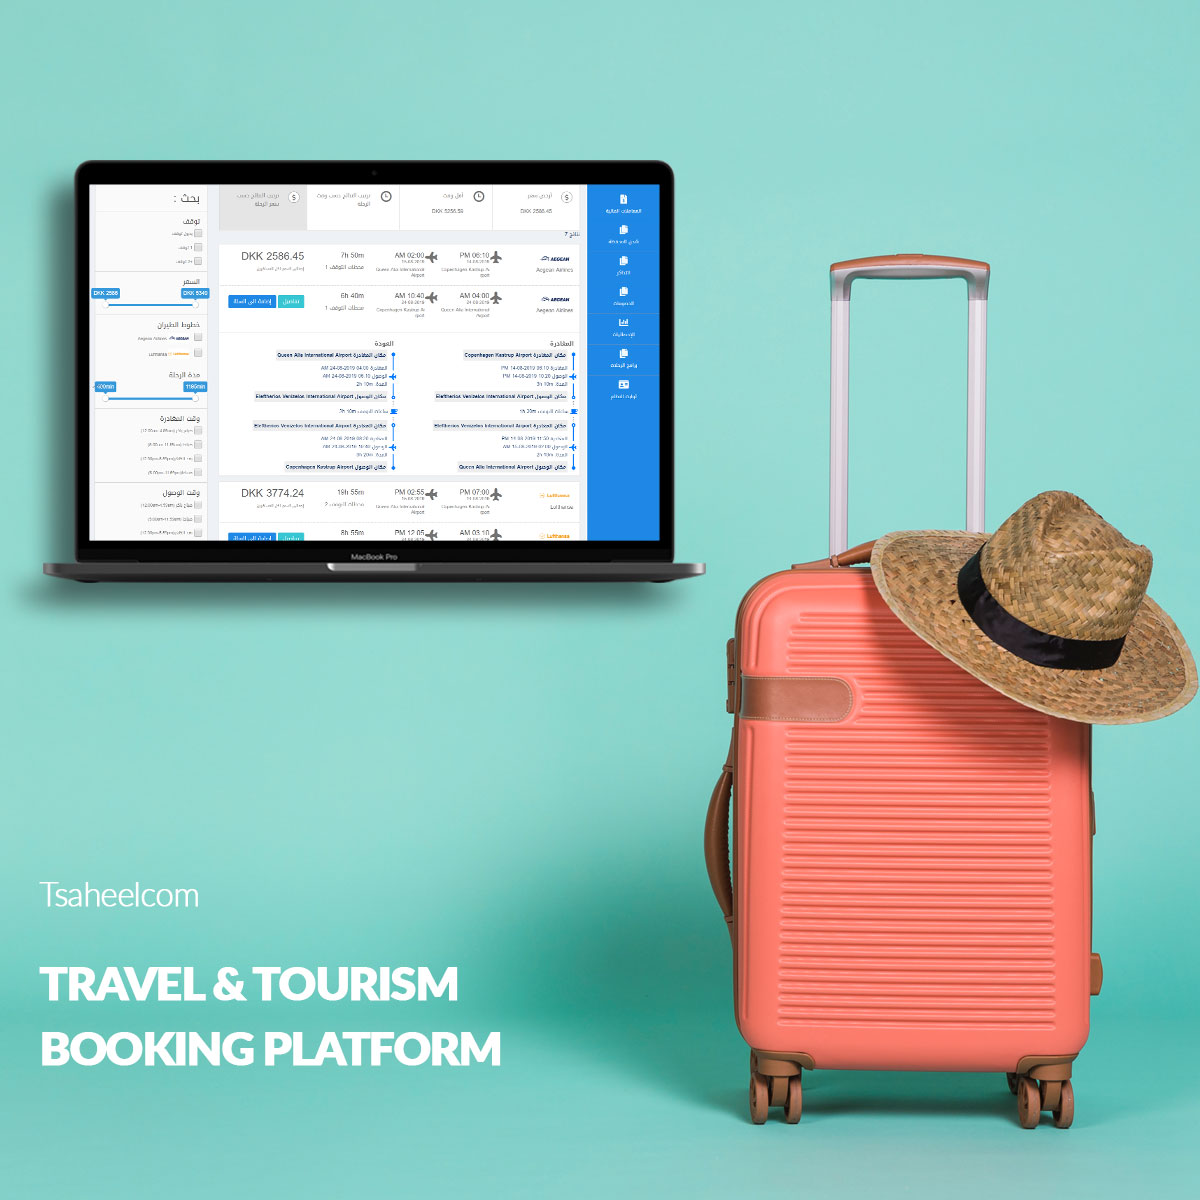 Travel & Tourism Booking Platform